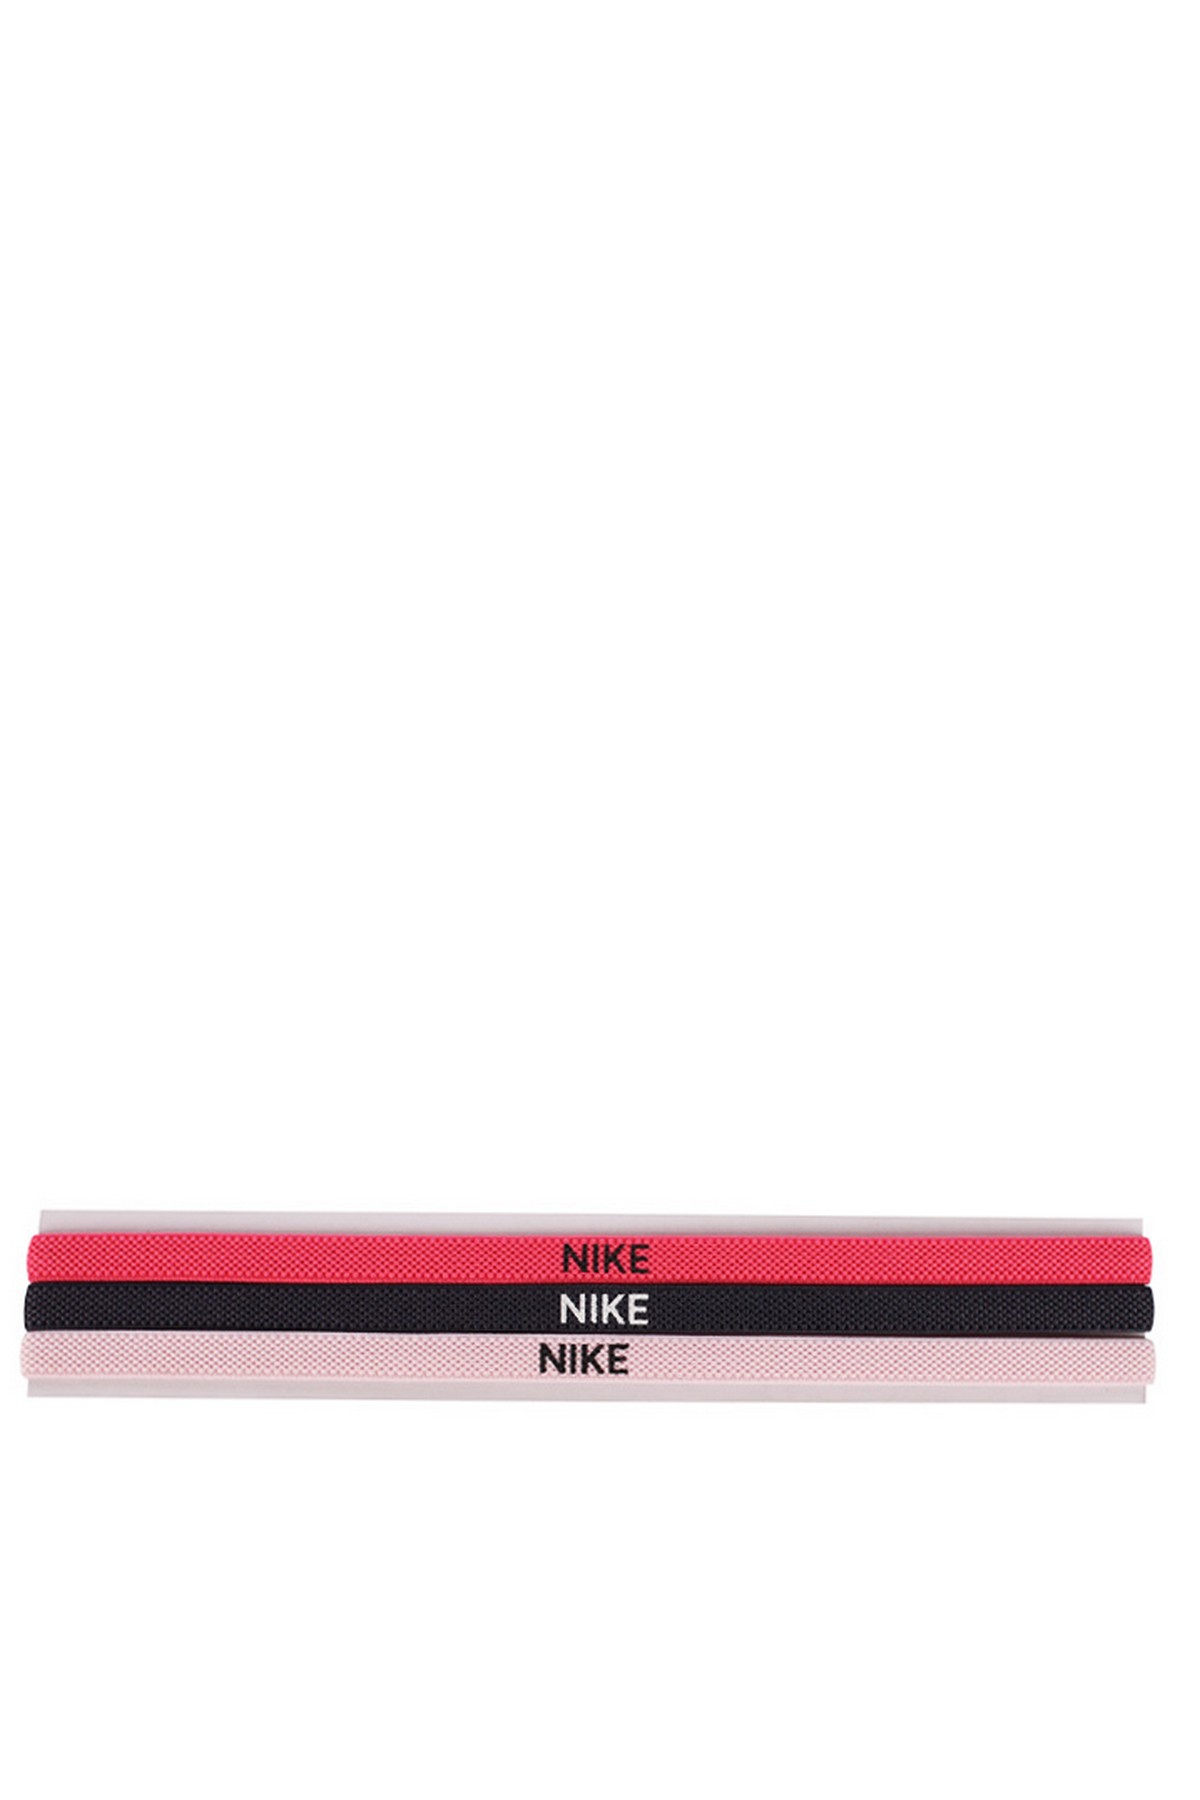 Nike N.JN.04 - Elastik Hairbands Fuşya/Pembe Saç Bandı